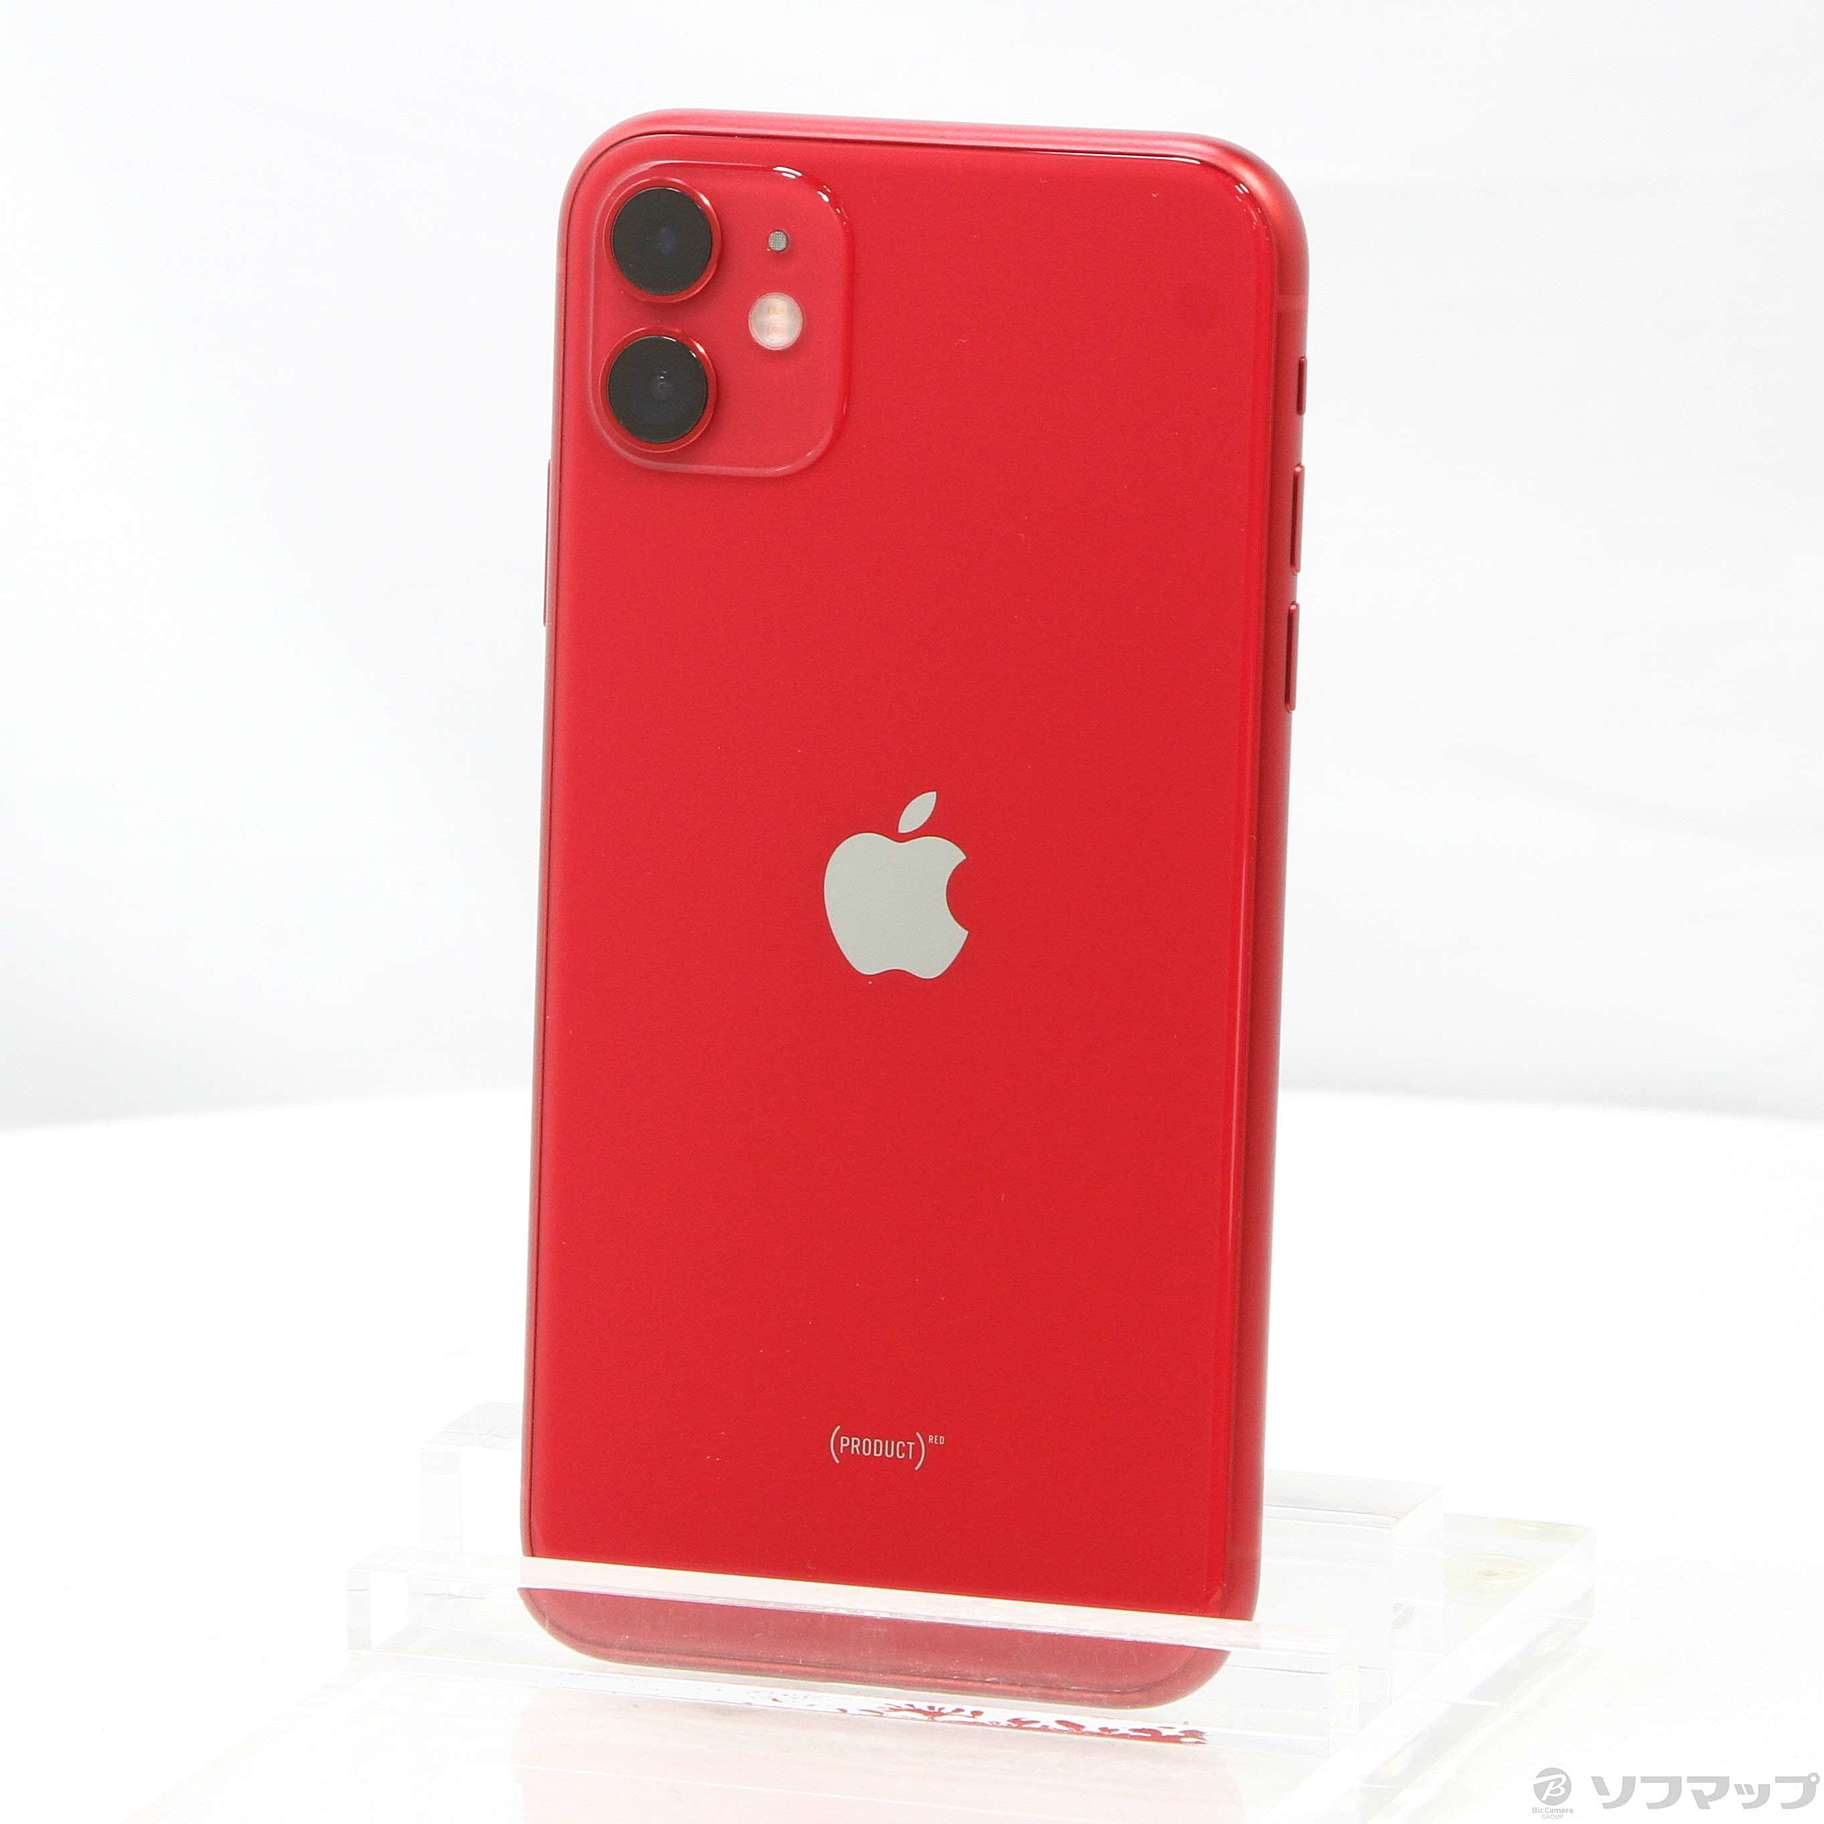 iPhone 11 RED 256 GB SIMフリー